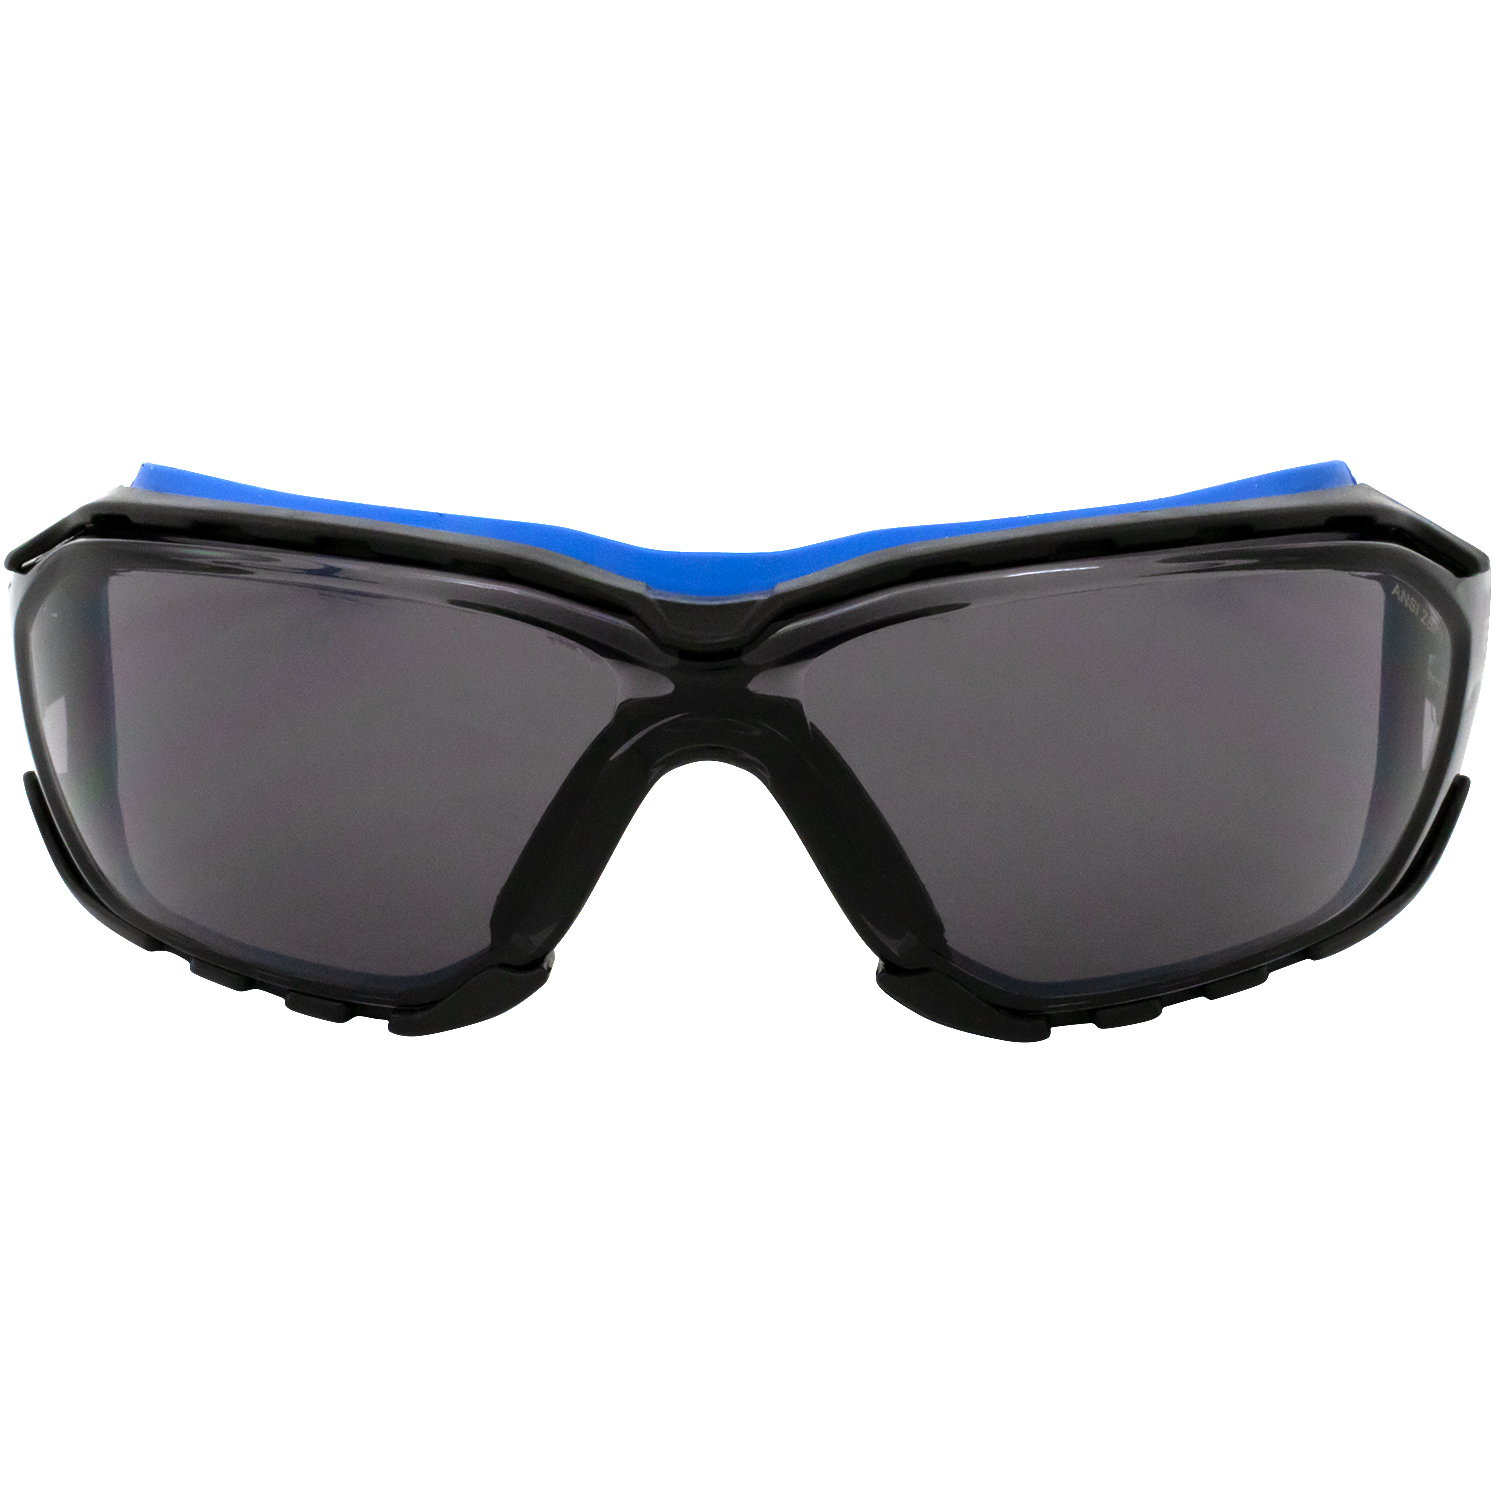 Birdz Eyewear Gasket Safety Padded Motorcycle Sport Sunglasses Blue with Smoke Lens - image 2 of 7